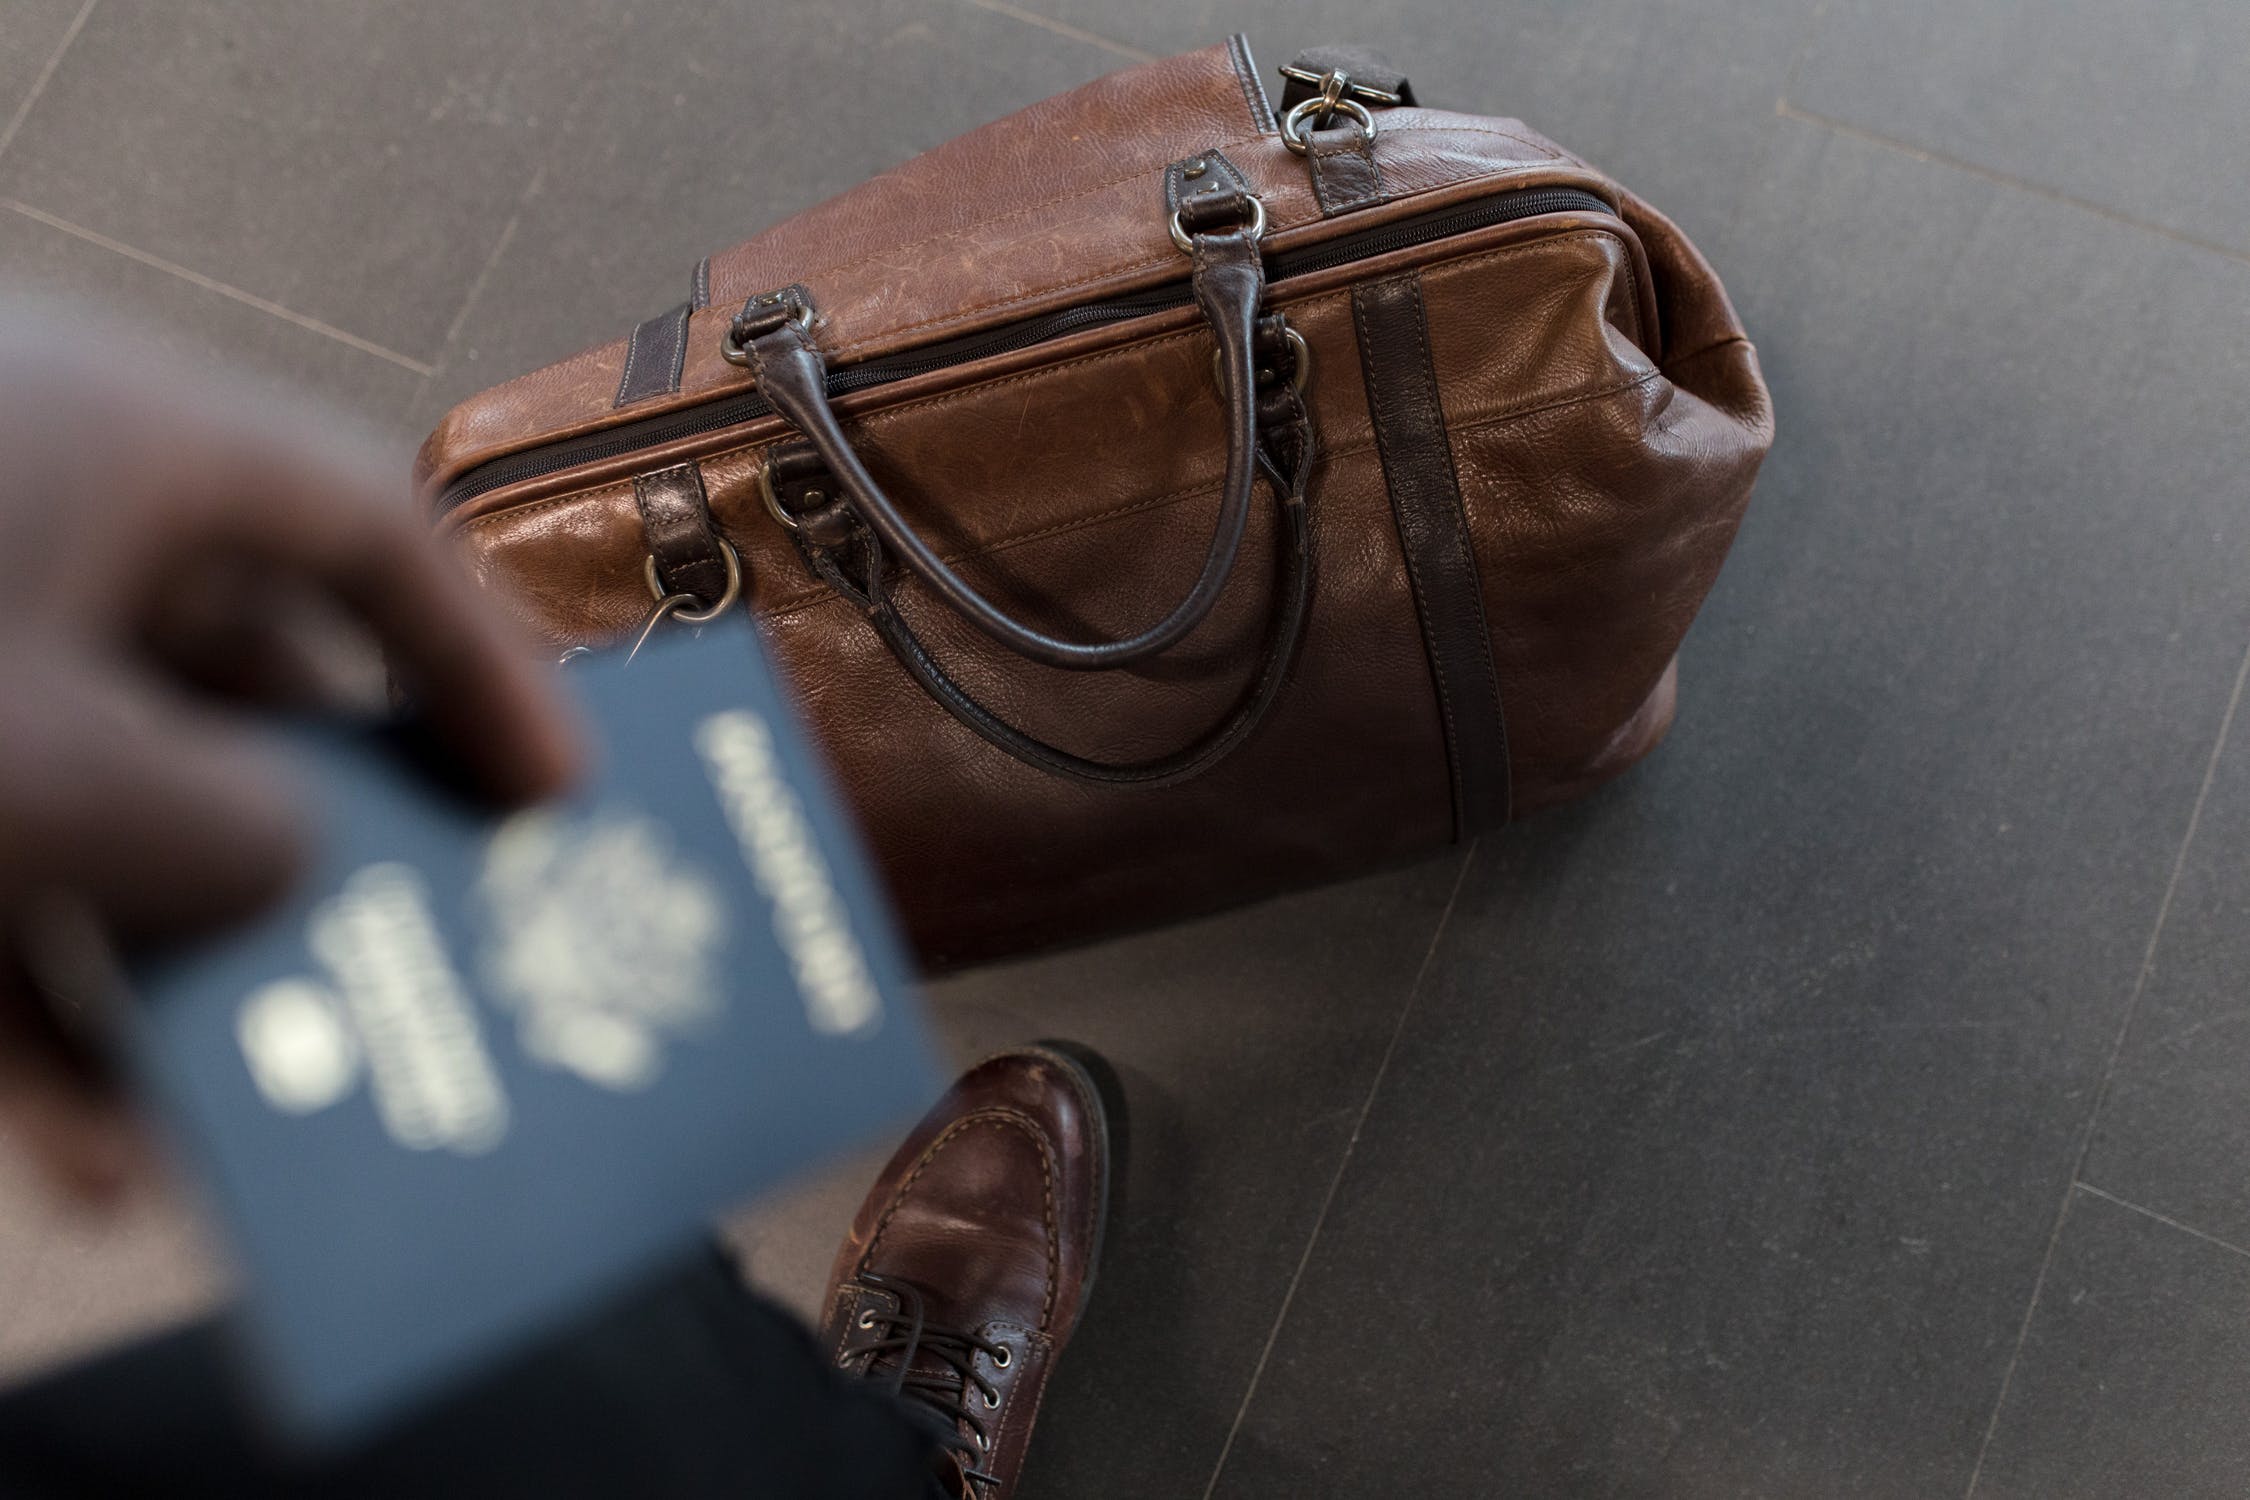 How to make a Travel Insurance Claim?